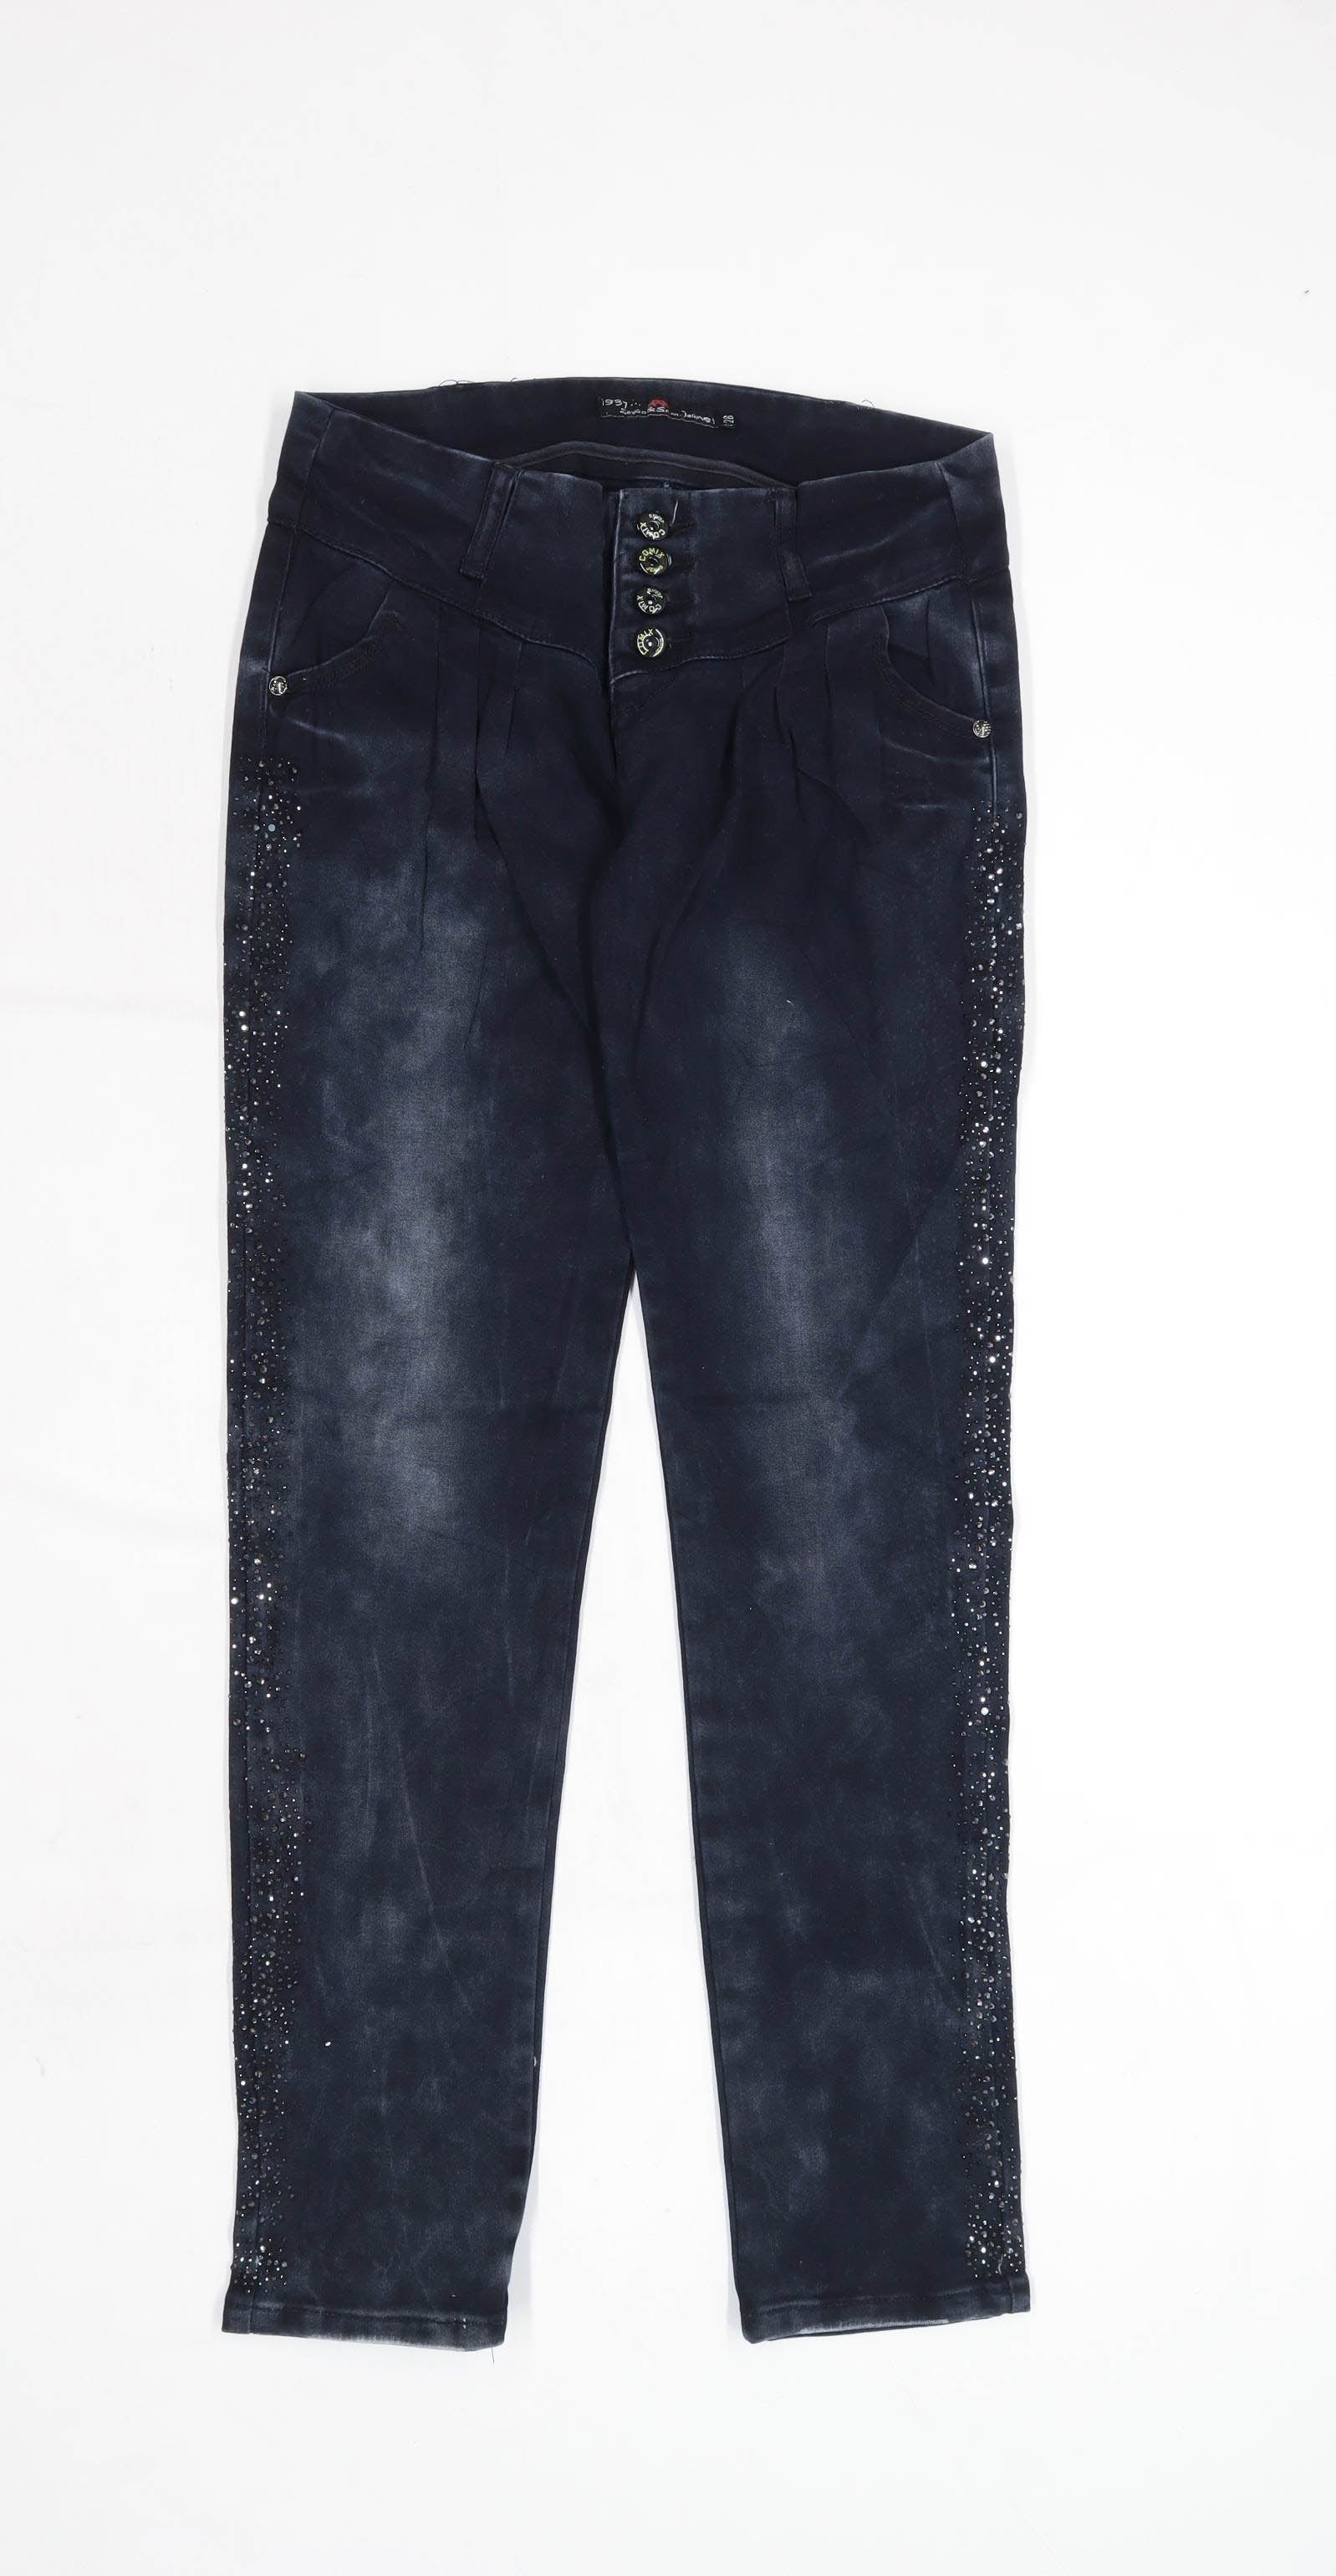 Wade Bore blande Womens Seyoo & Sam Jeans Black Sequined Cotton Blend Jeans Size W30/L3 –  Preworn Ltd